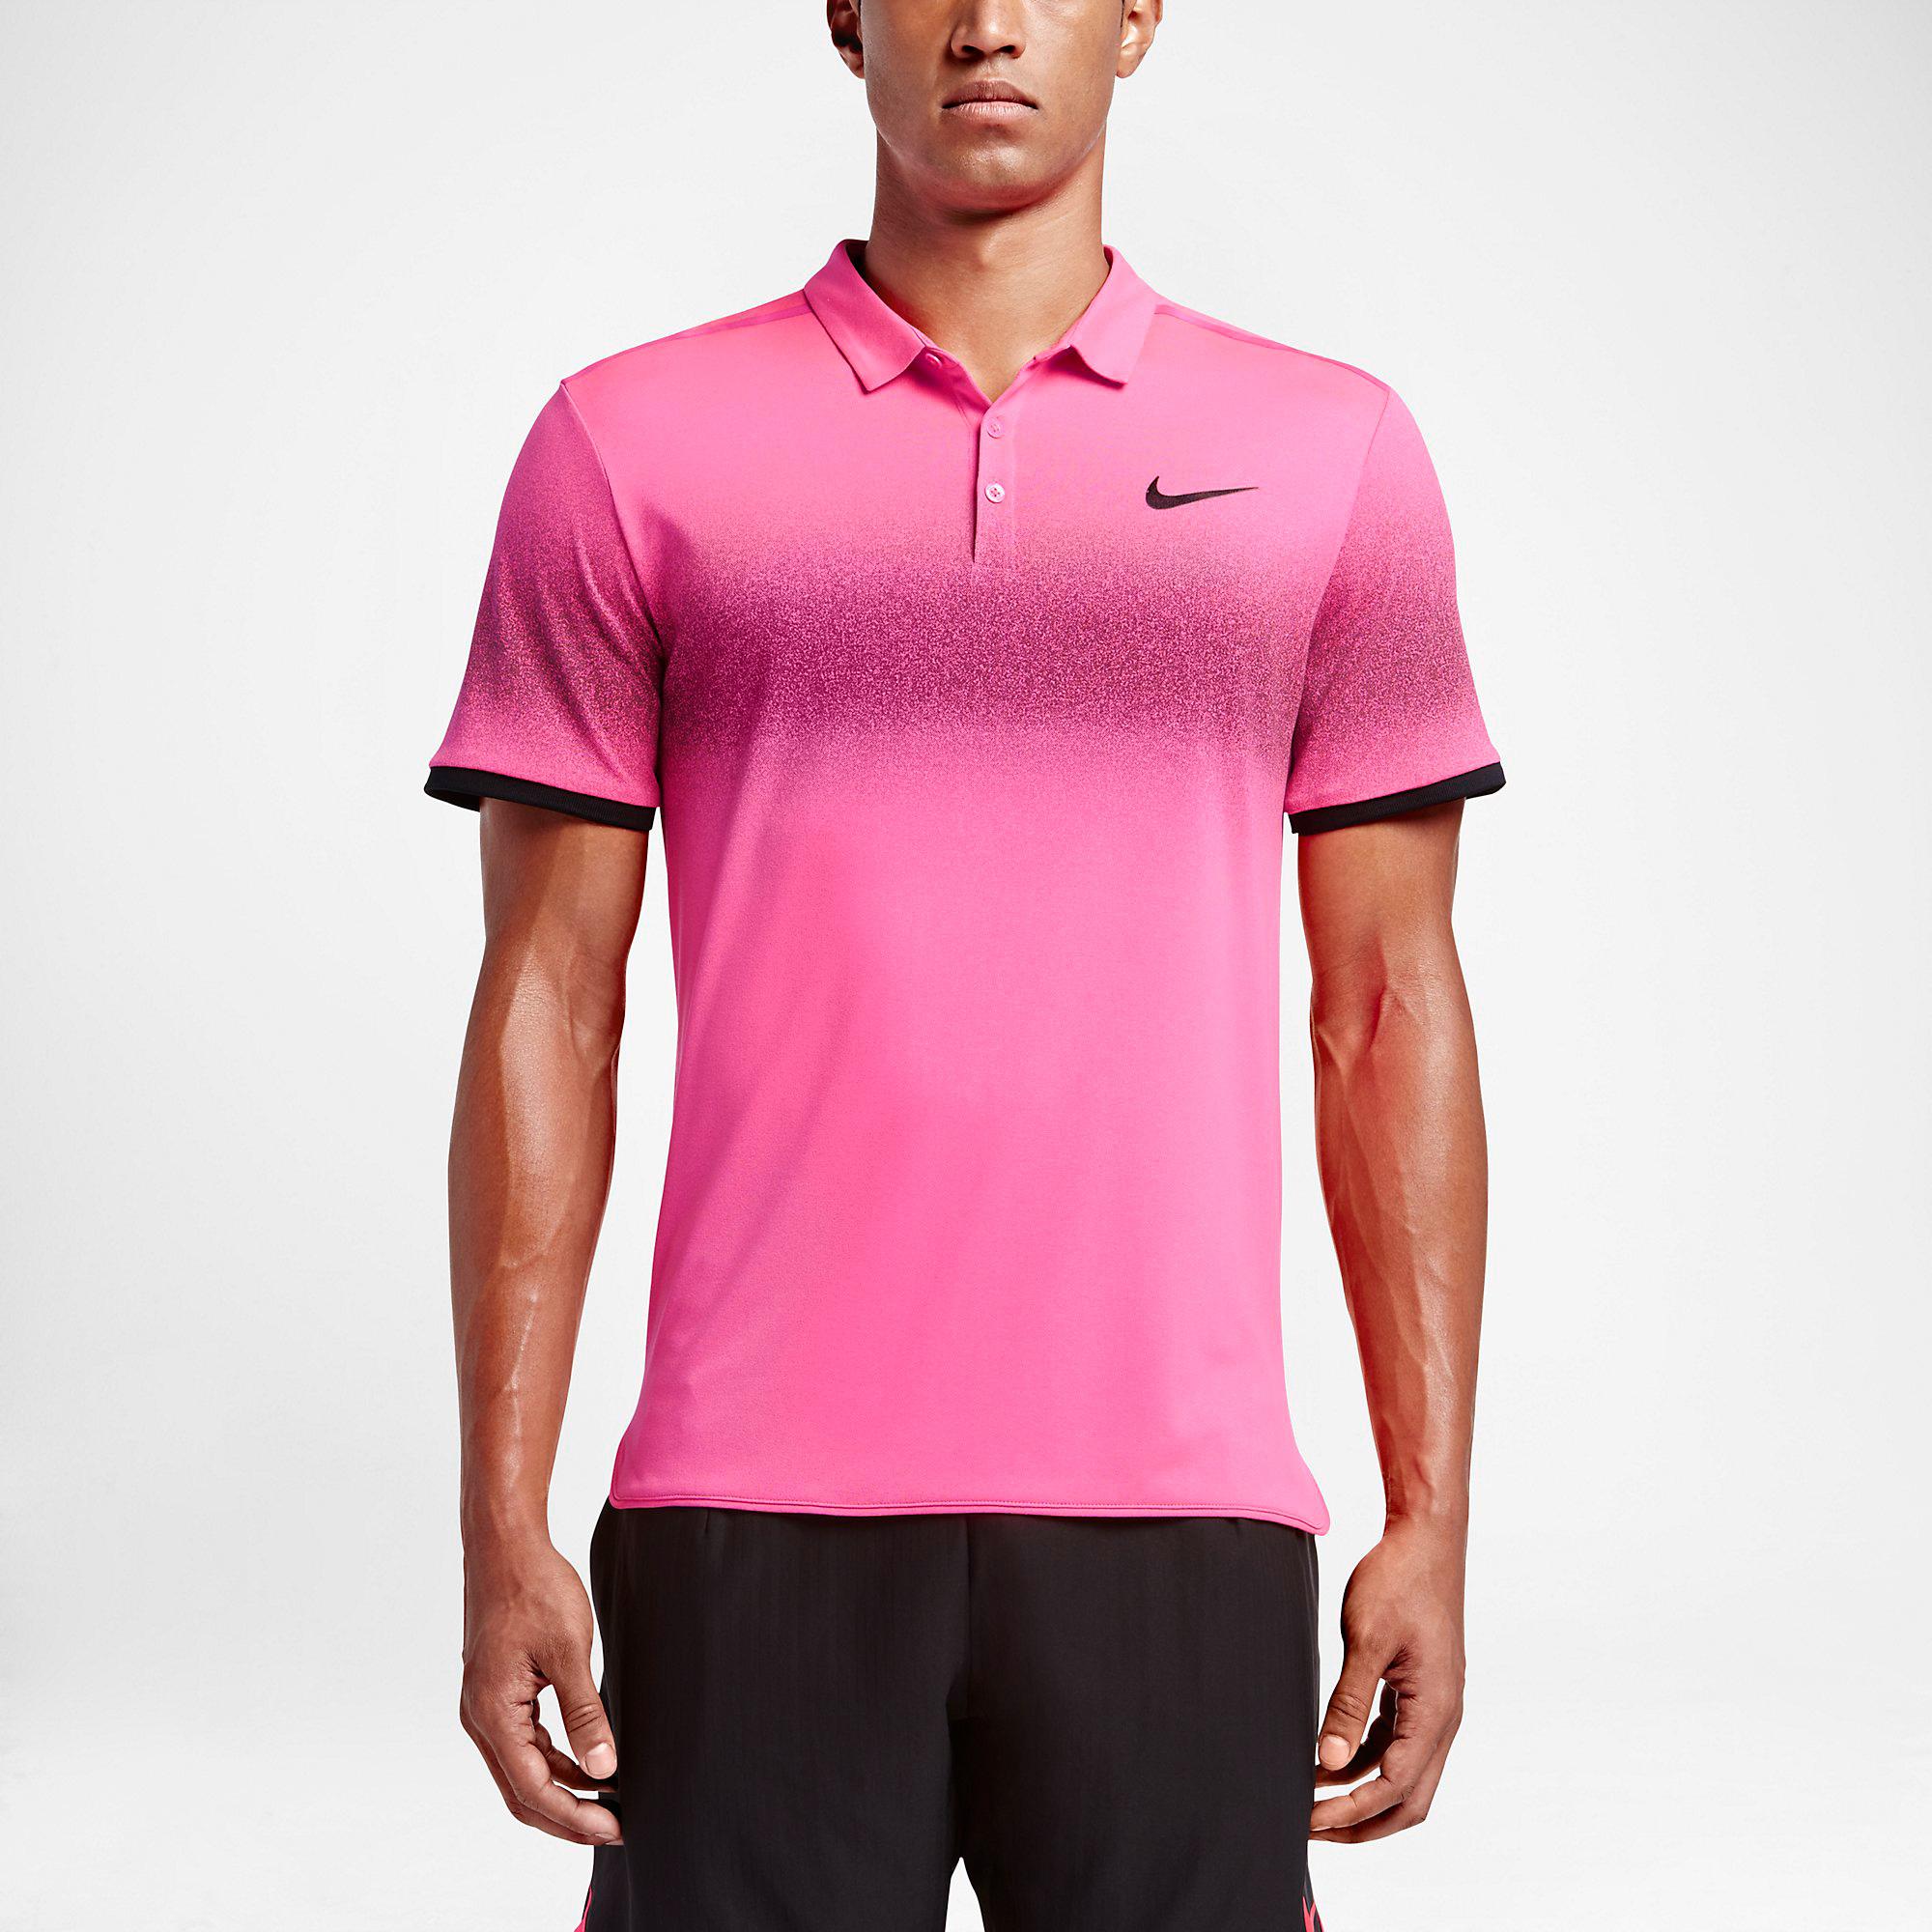 Поло найк. Поло Nike RF. Nike Polo для тенниса. Поло Nike теннисные мужские. Поло Nike мужские Grin.